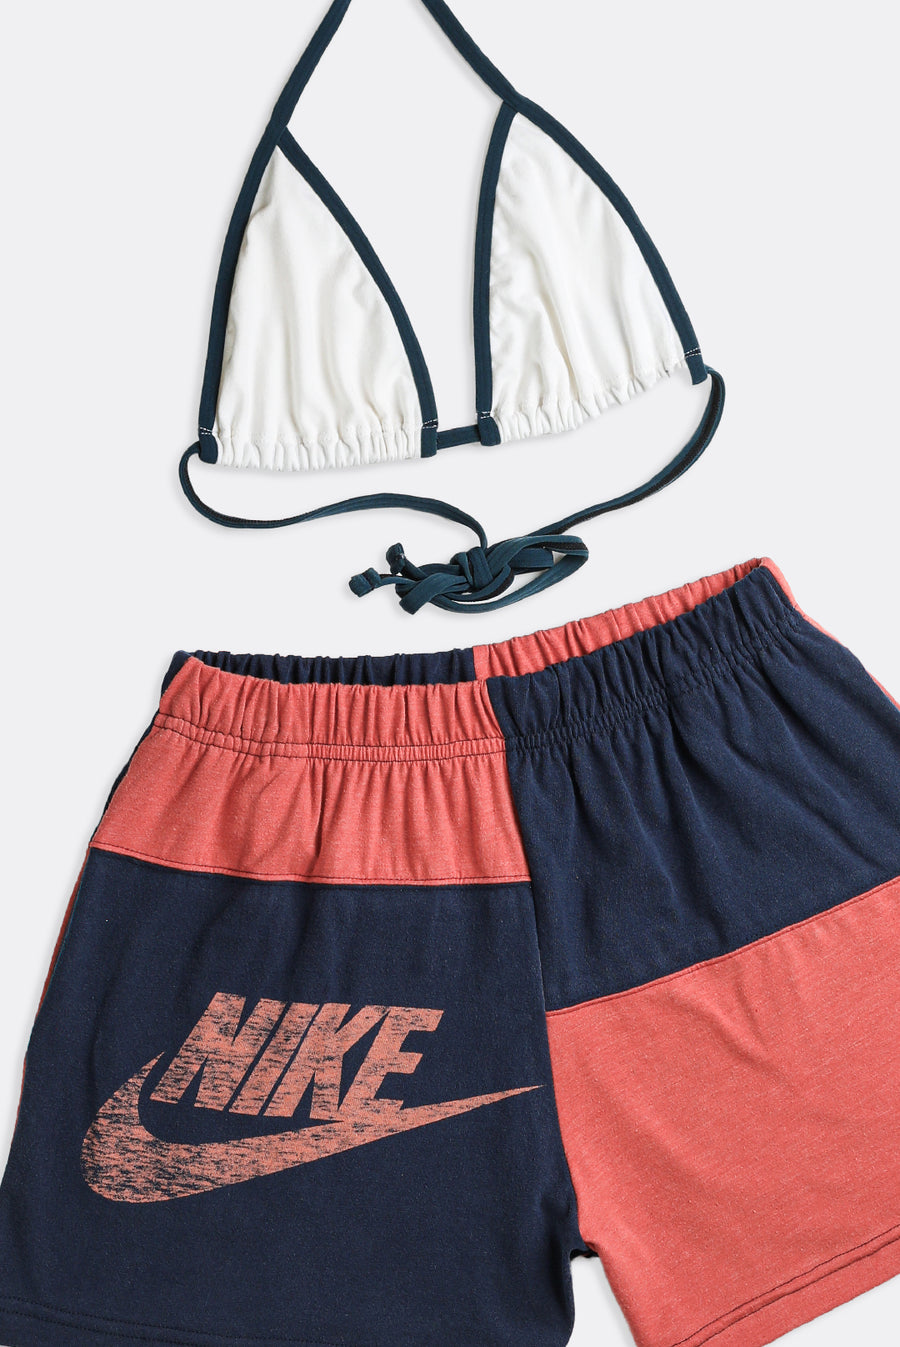 Rework Nike Patchwork Tee Shorts Set - S